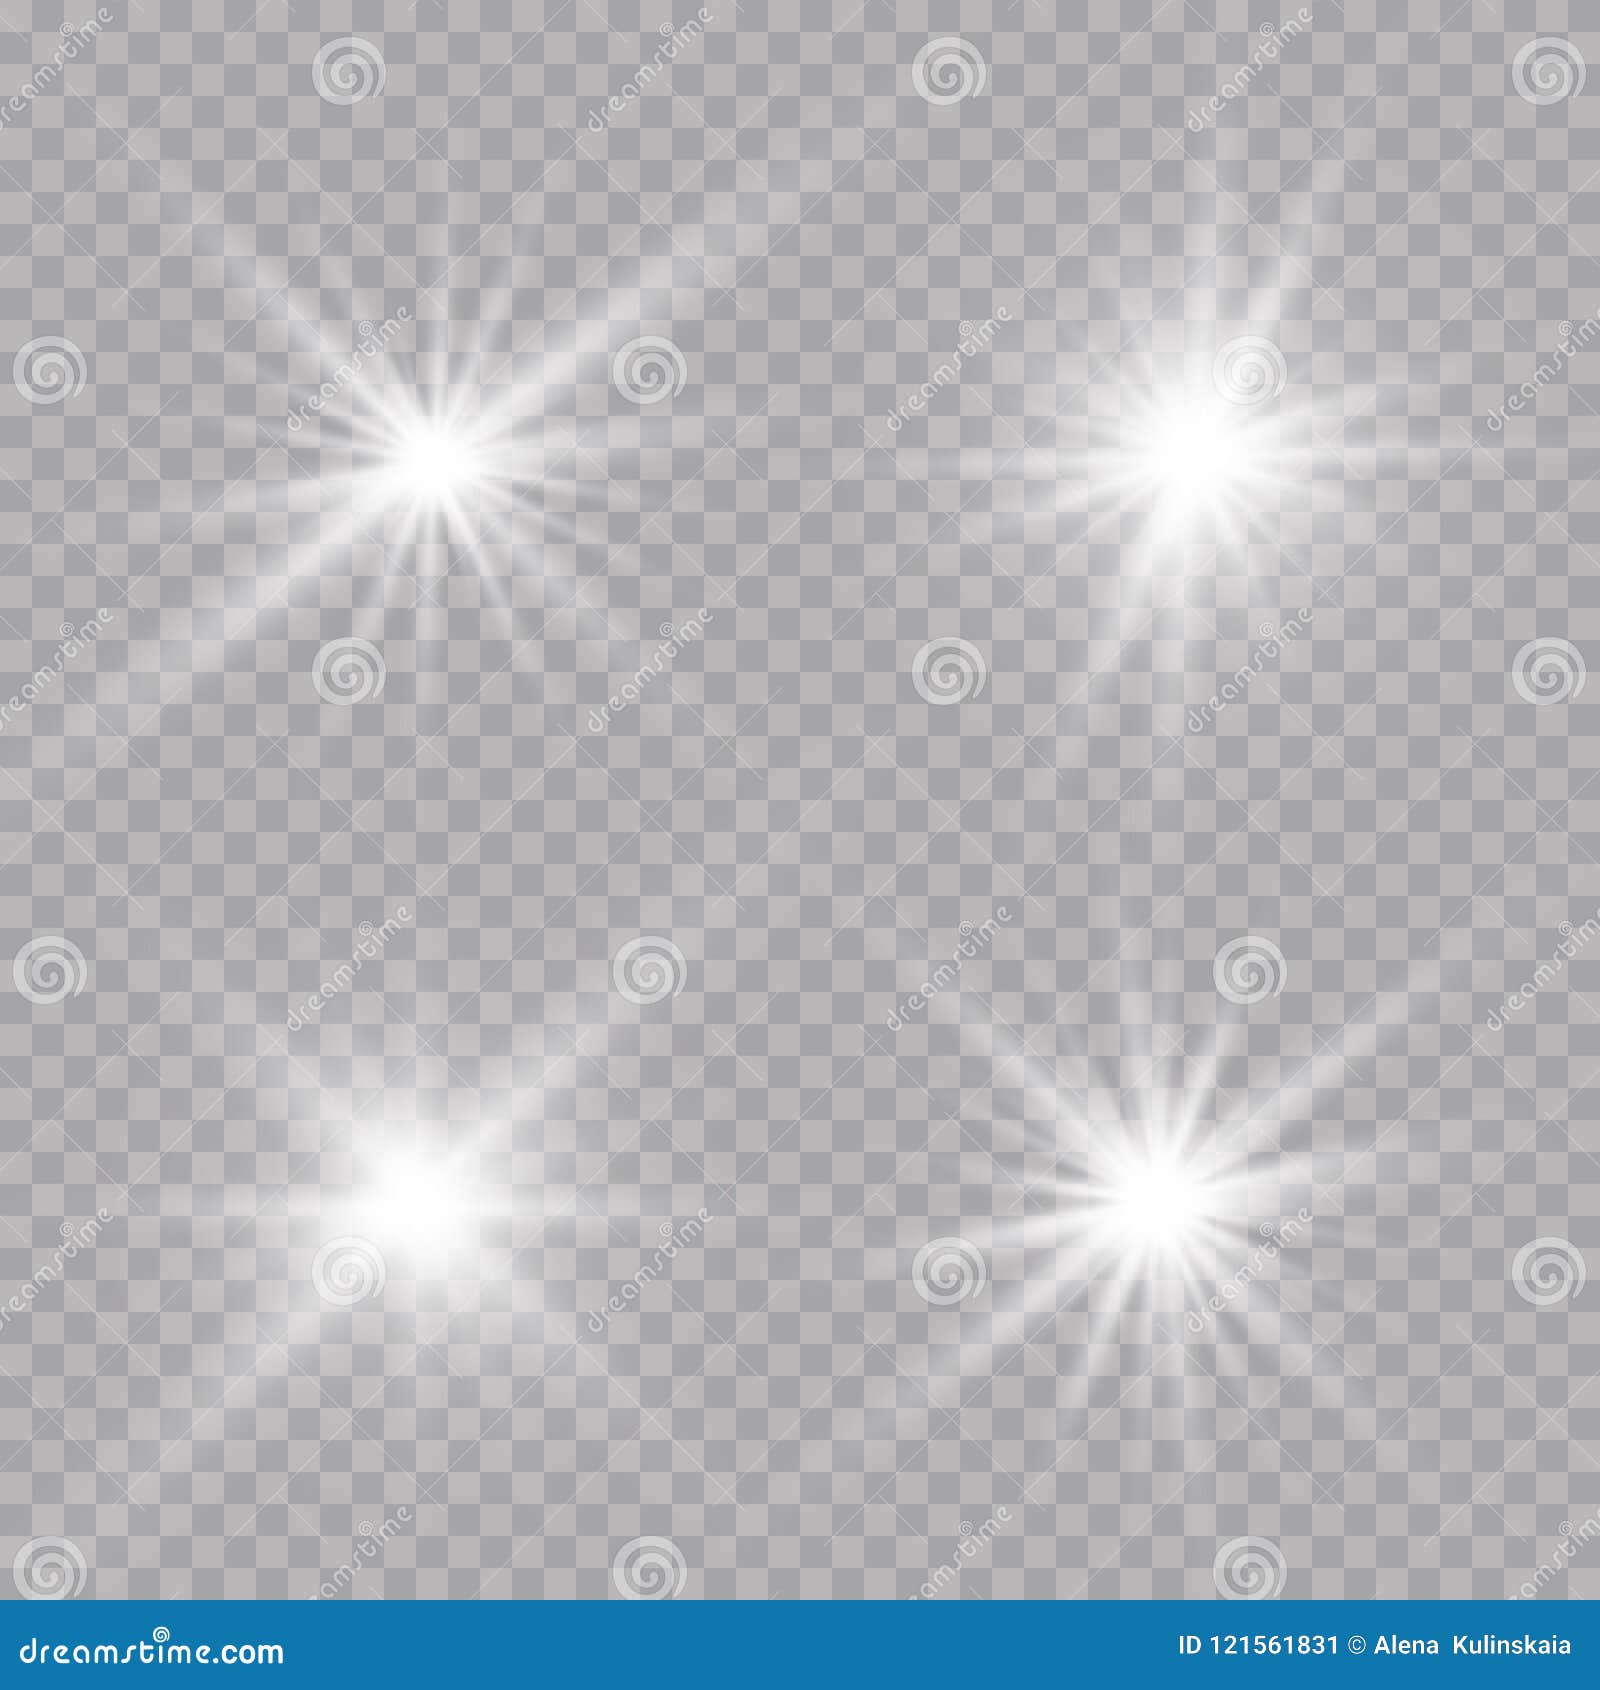 Transparent Sunlight Lens Flare Light Effect. Star Burst with Sparkles ...